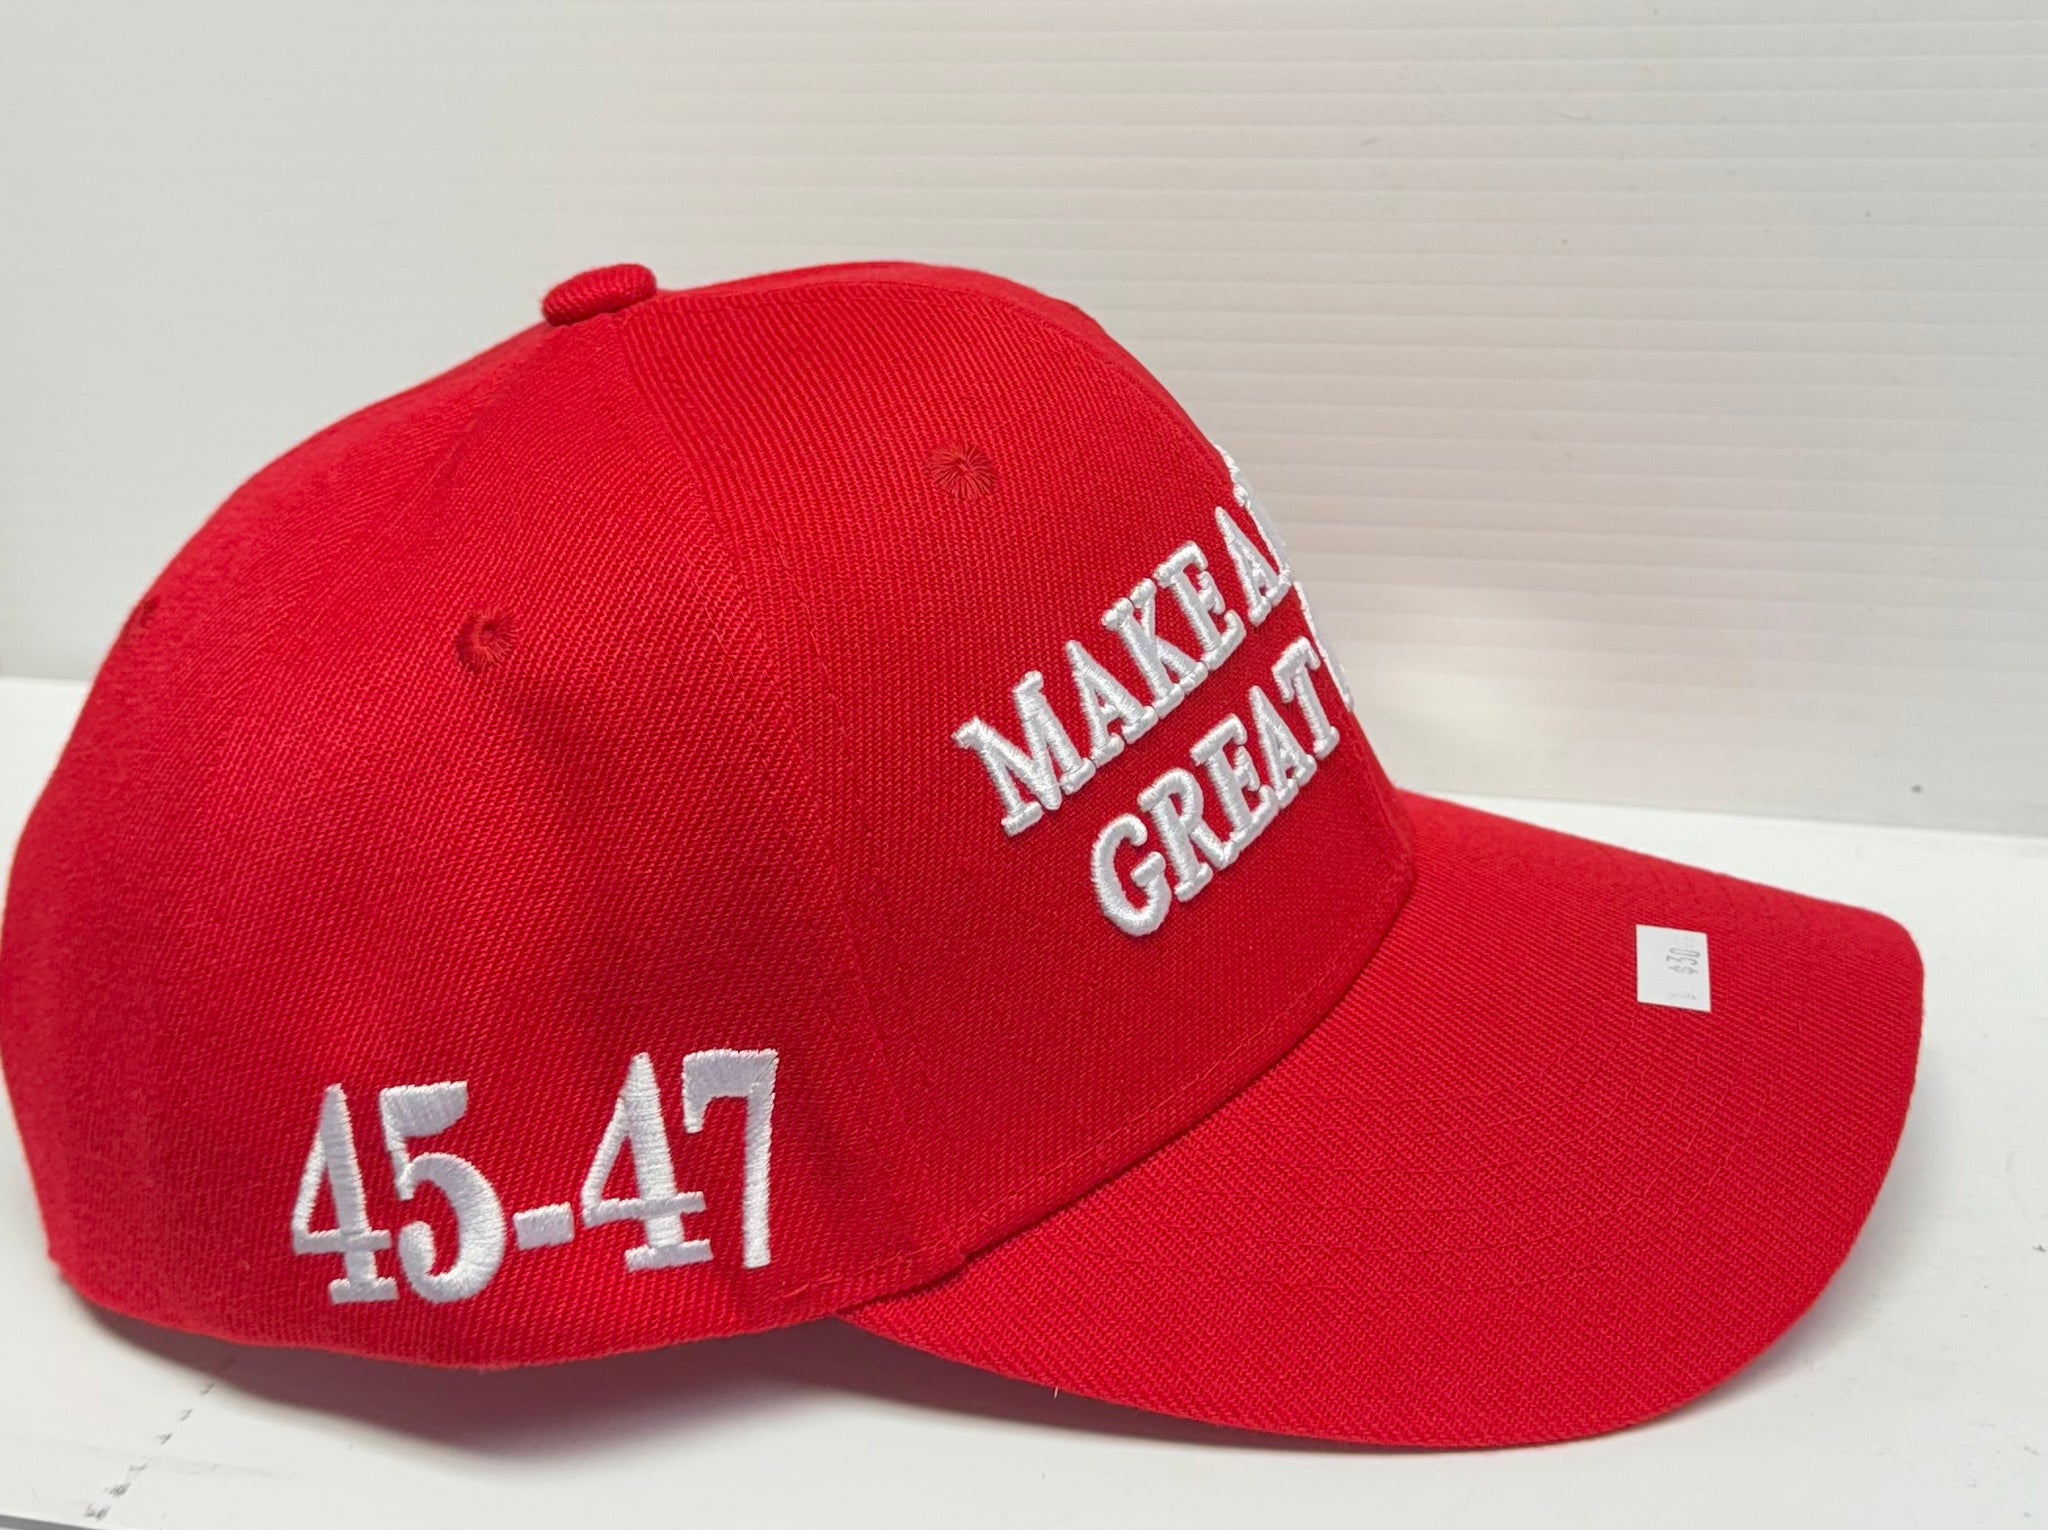 Premium embroidered Trump 45-47 "Make America Great Again!" red hat